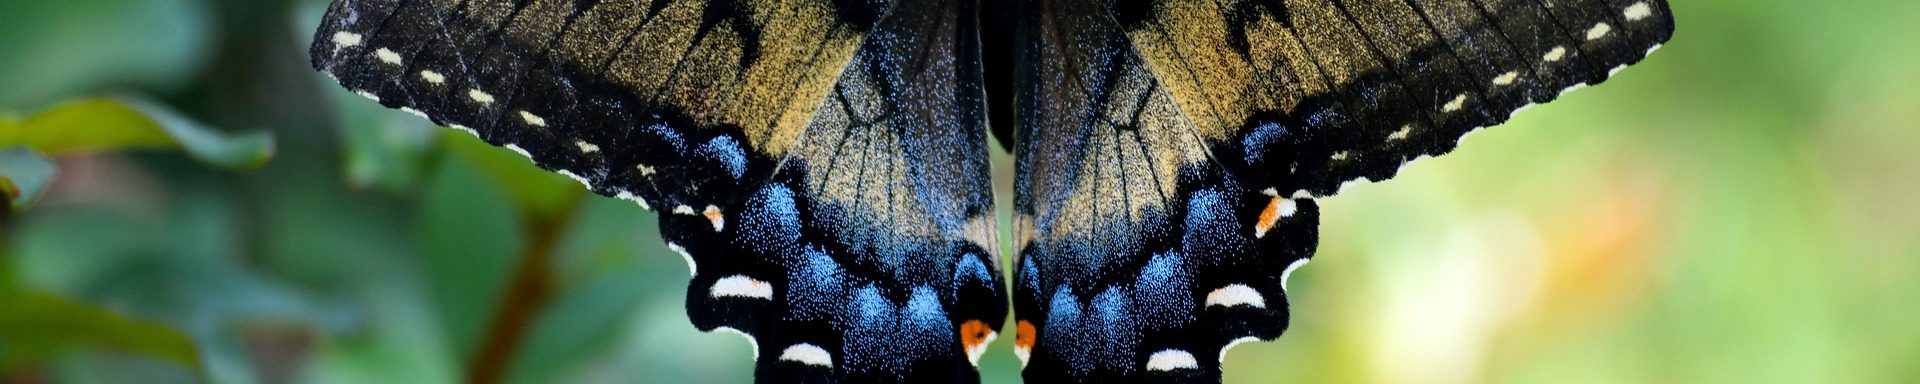 papillon-machaon-pixabay-paulbr75-aspect-ratio-1500x300